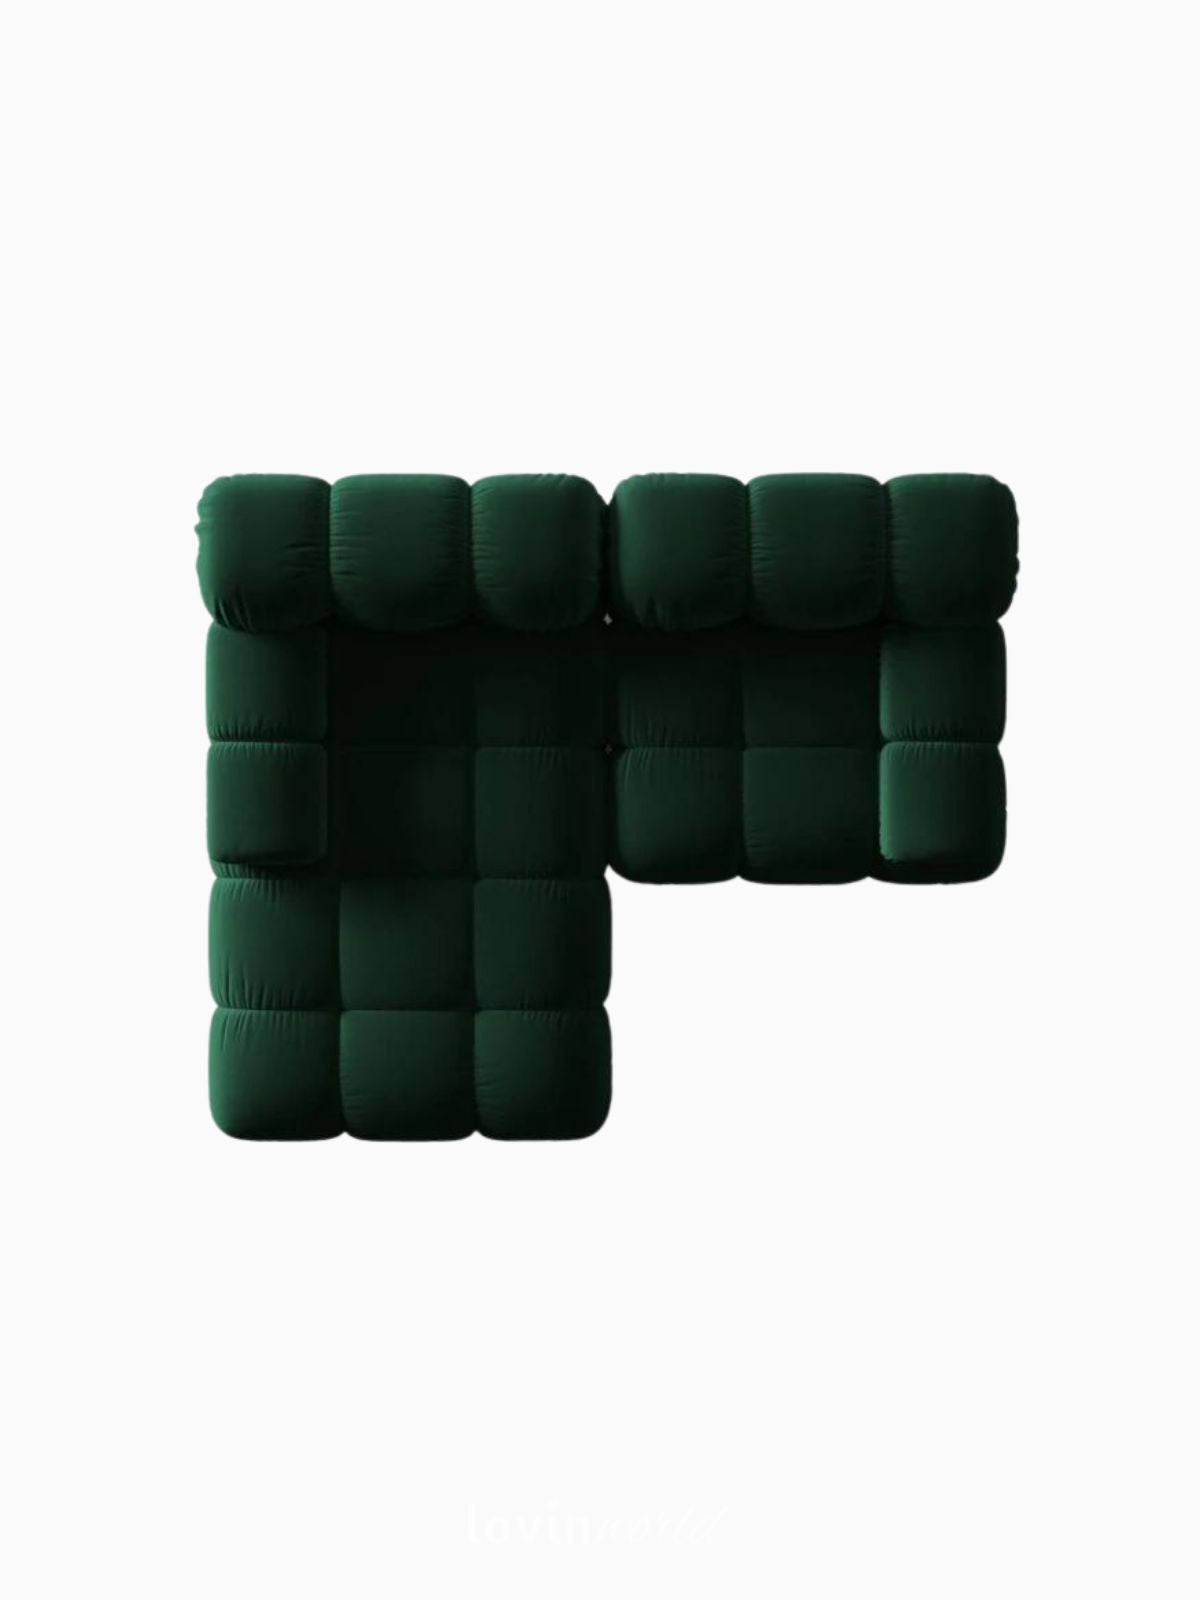 Divano modulare 3 posti Bellis in velluto, colore verde-5